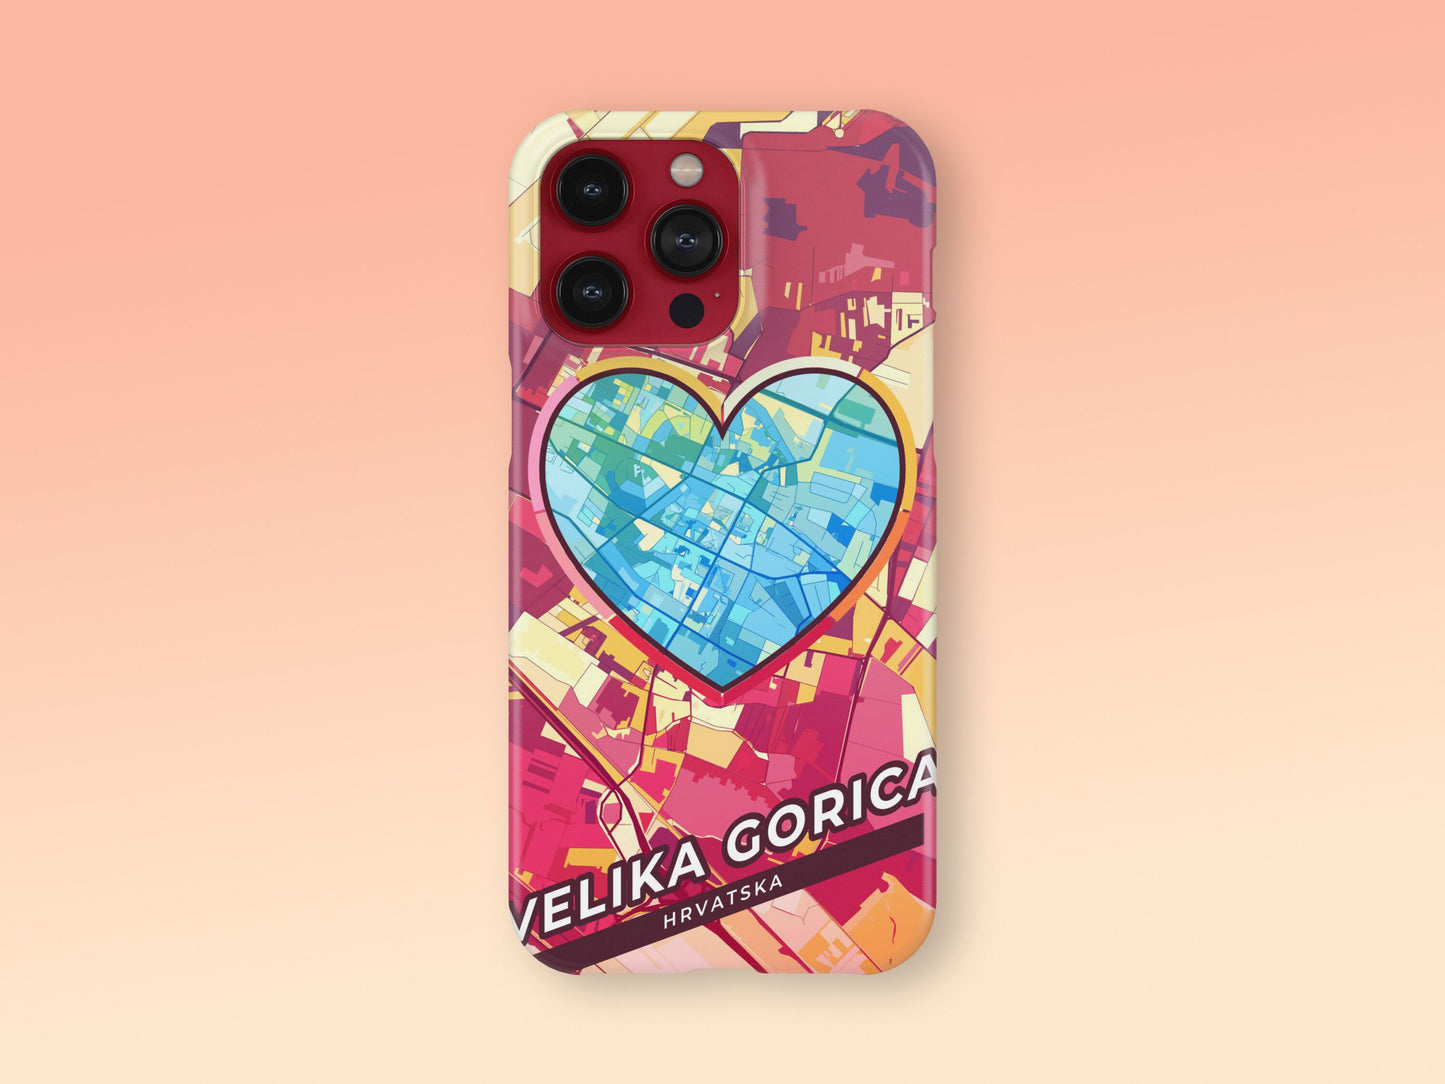 Velika Gorica Hrvatska slim phone case with colorful icon. Birthday, wedding or housewarming gift. Couple match cases. 2